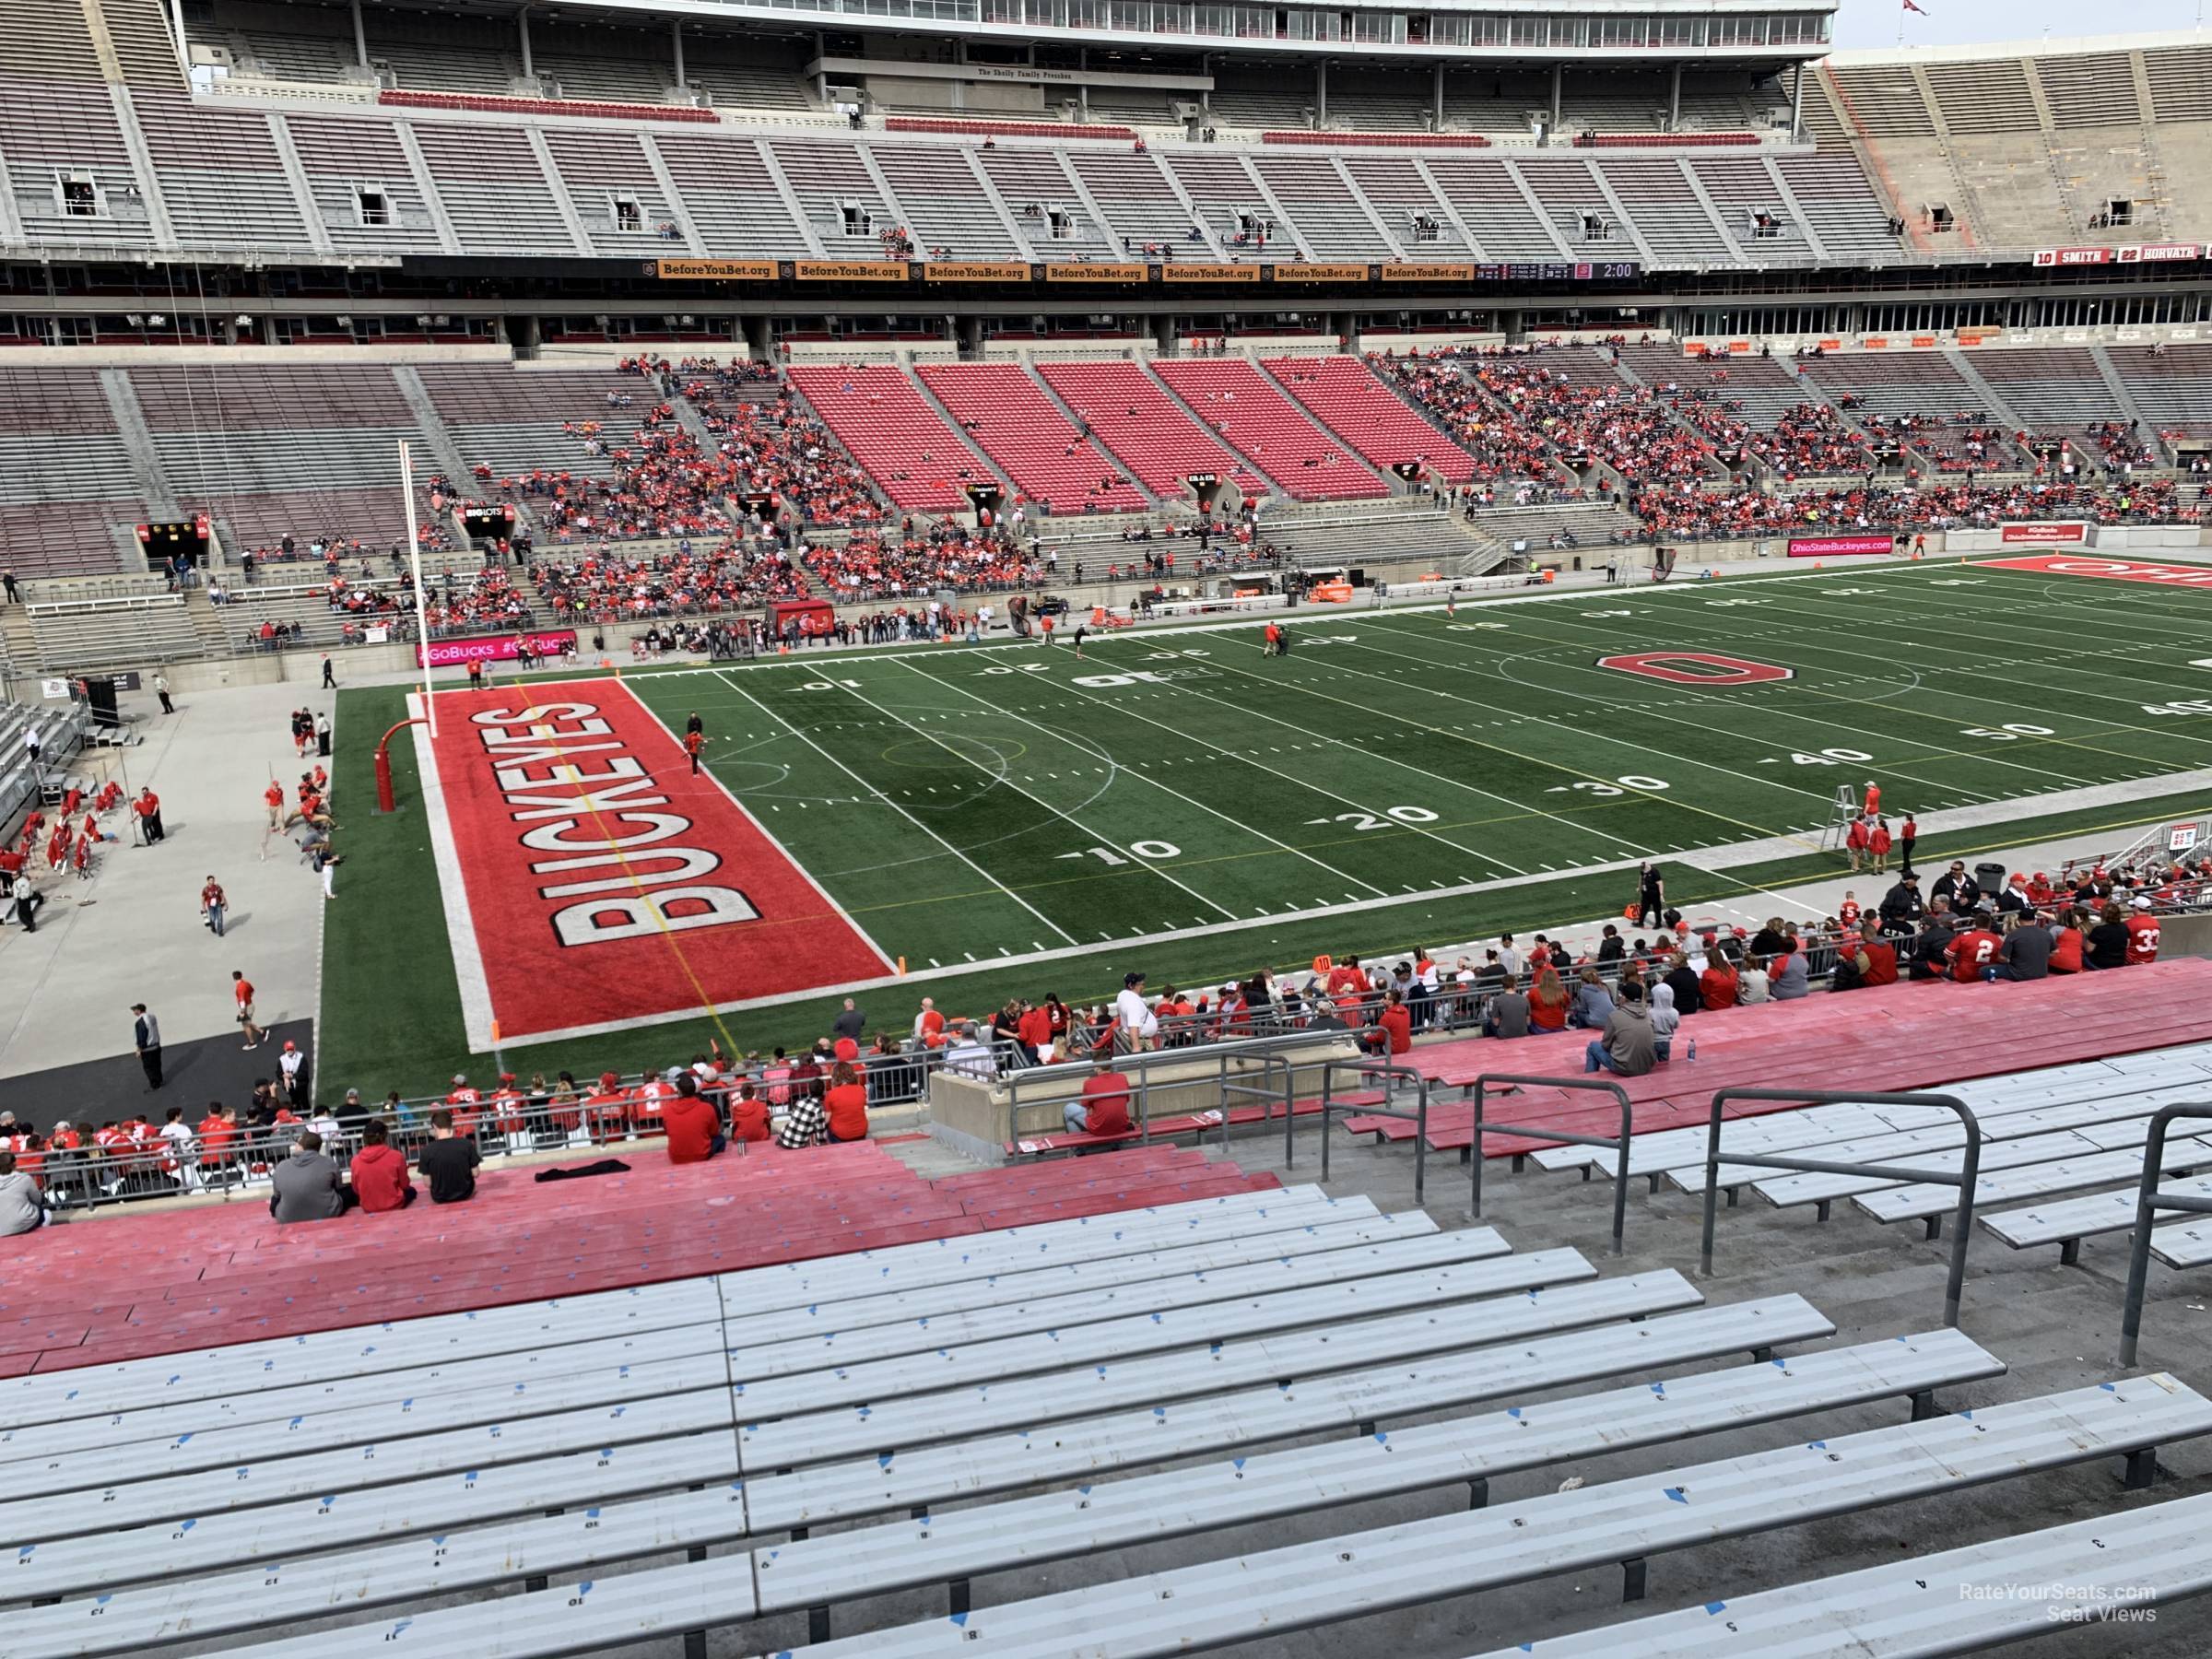 section 28a, row 25 seat view  - ohio stadium